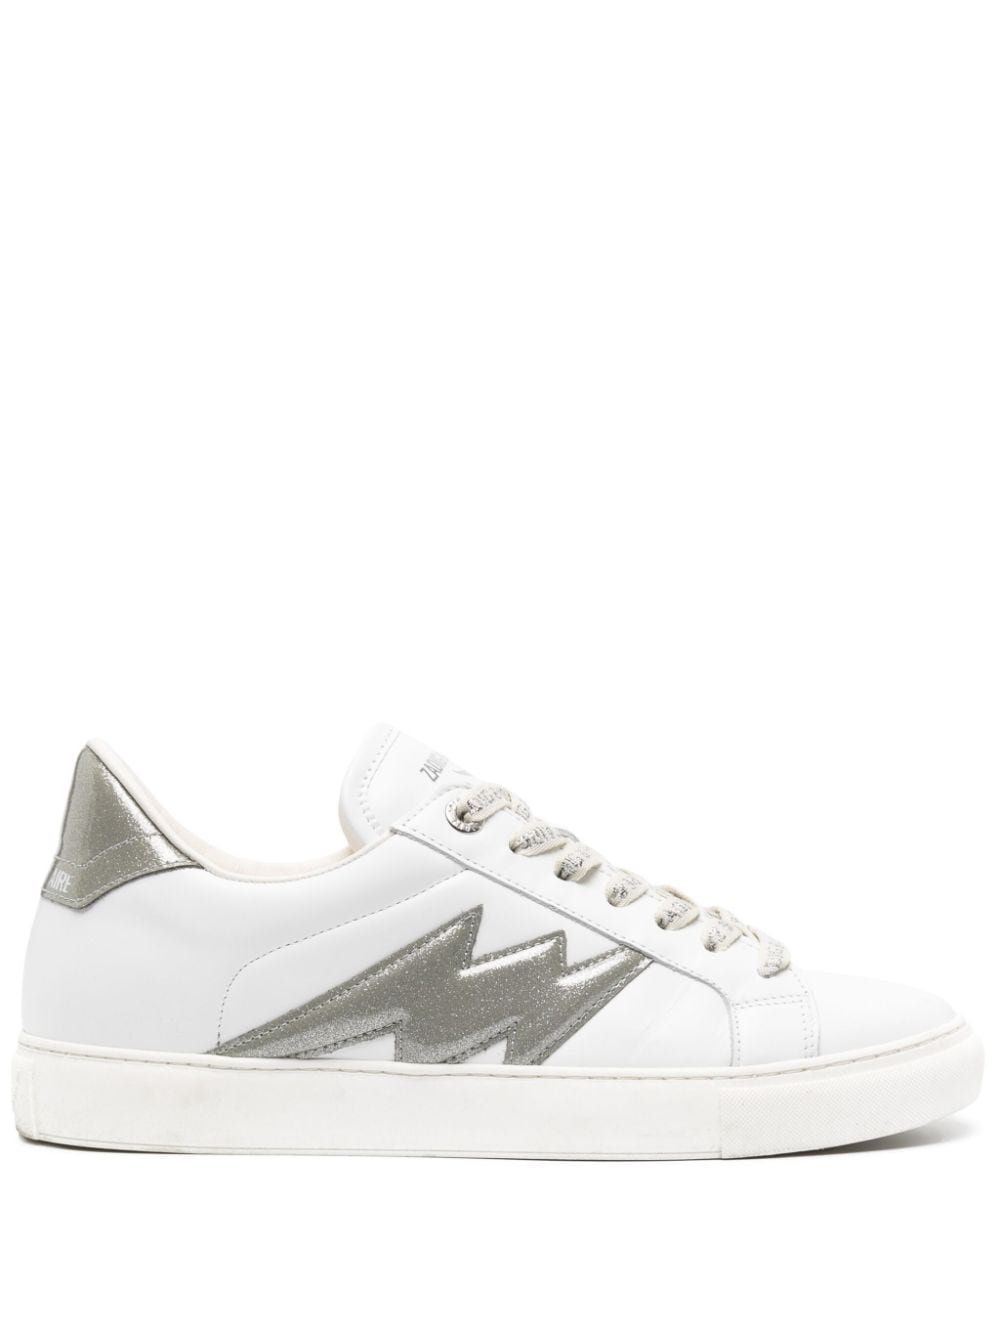 Zadig&Voltaire ZV1747 La Flash leather sneakers - White von Zadig&Voltaire